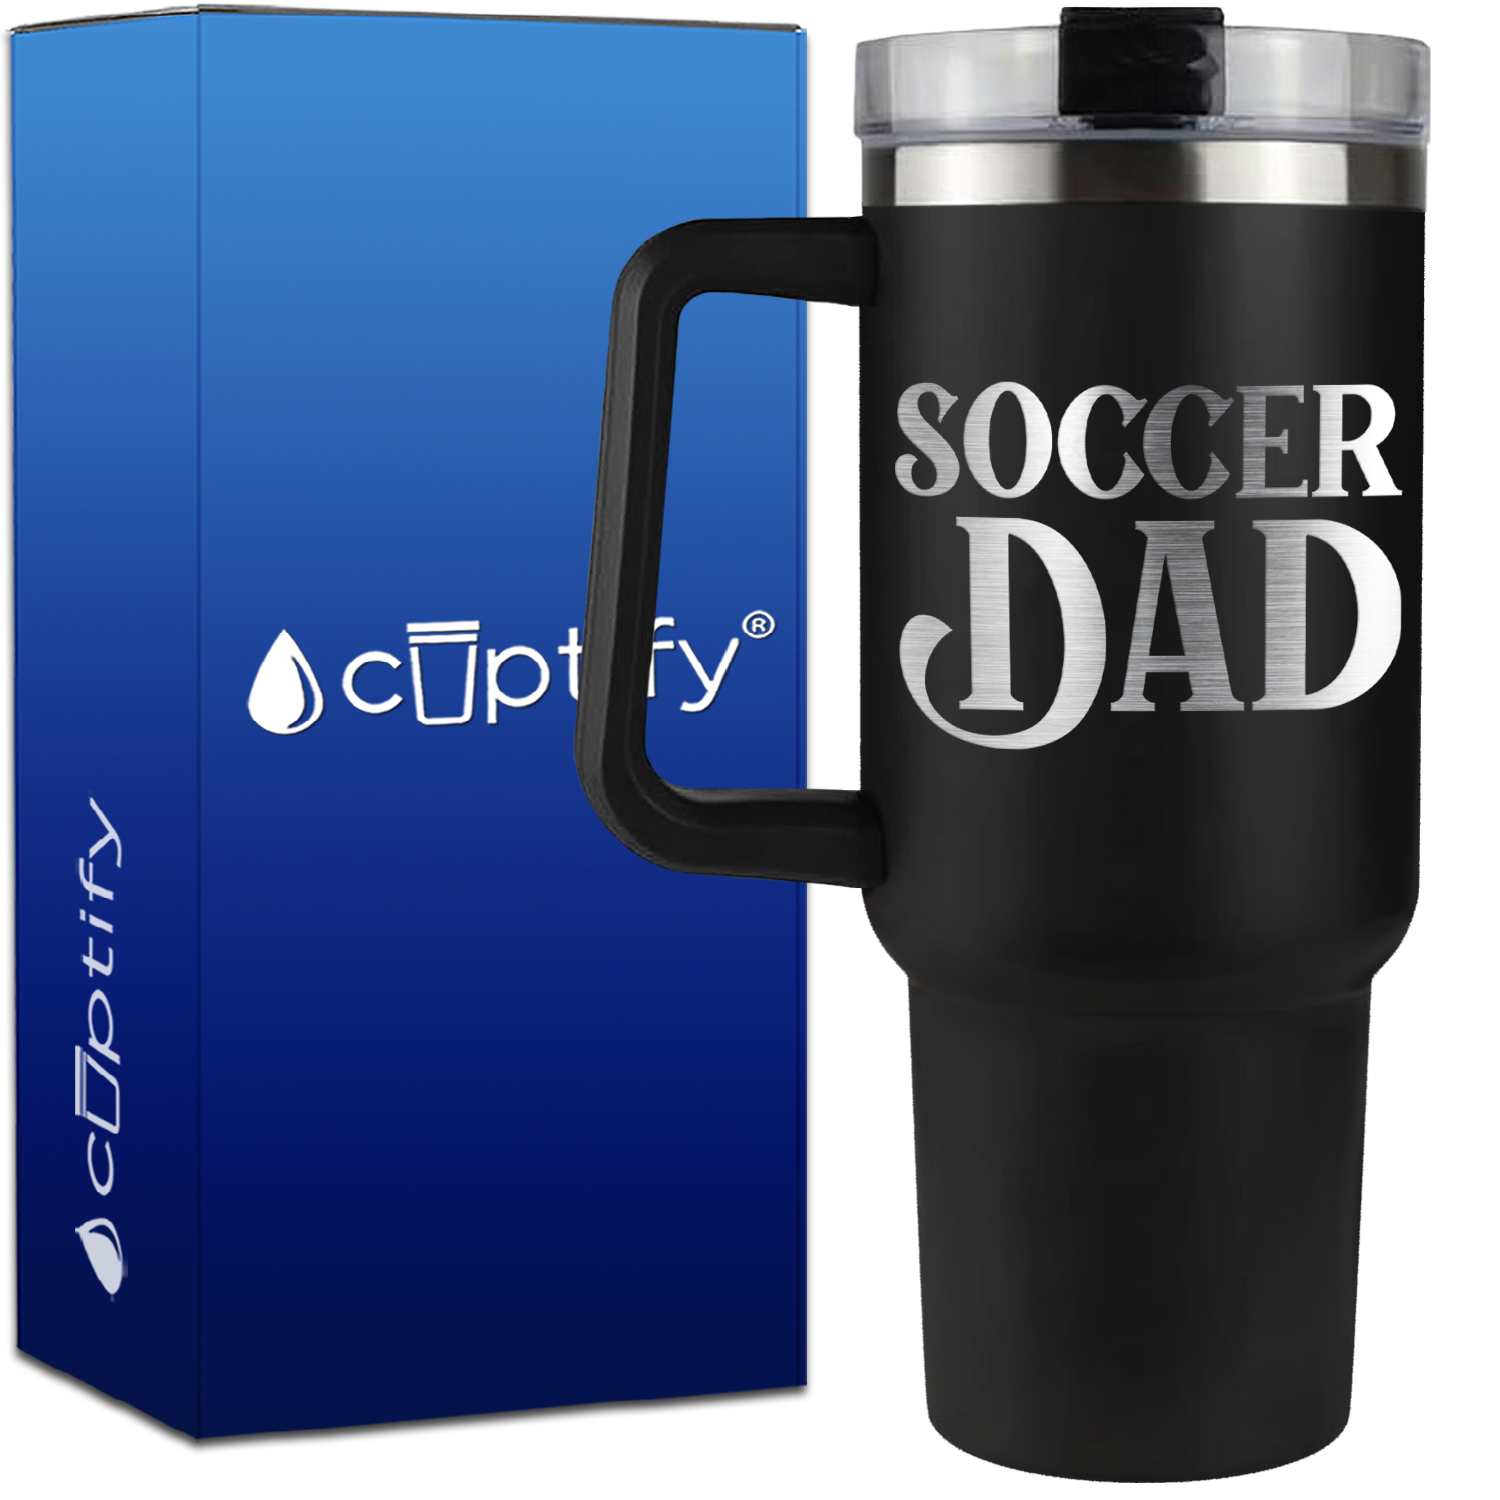 Soccer Dad on 40oz Soccer Traveler Mug